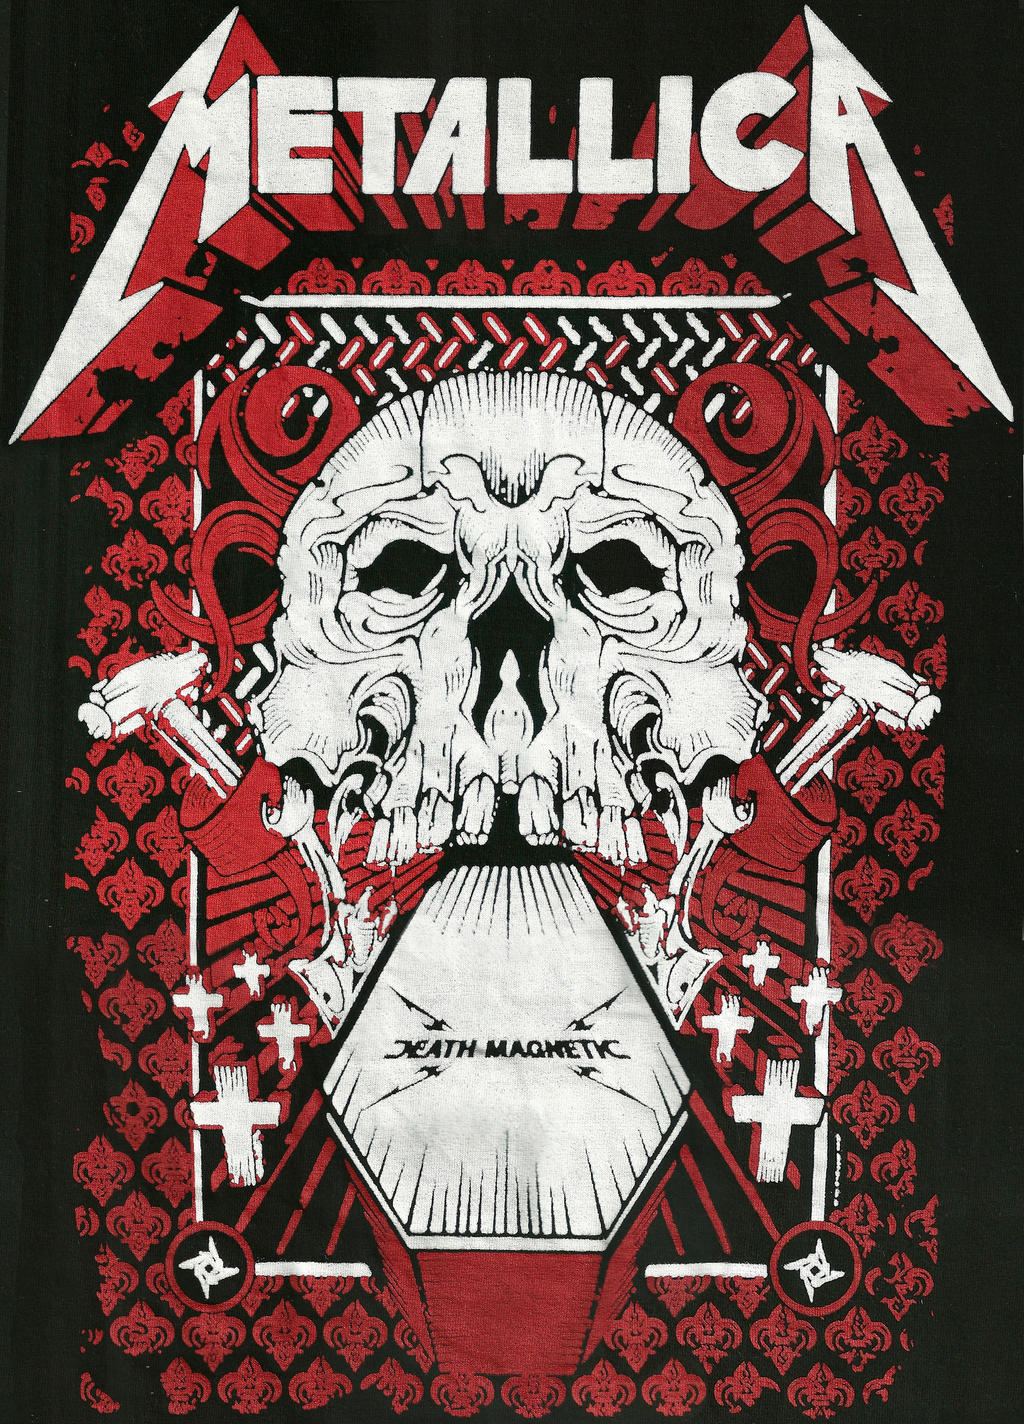 Metallica-Death Magnetic Camisa by EvanJC on DeviantArt